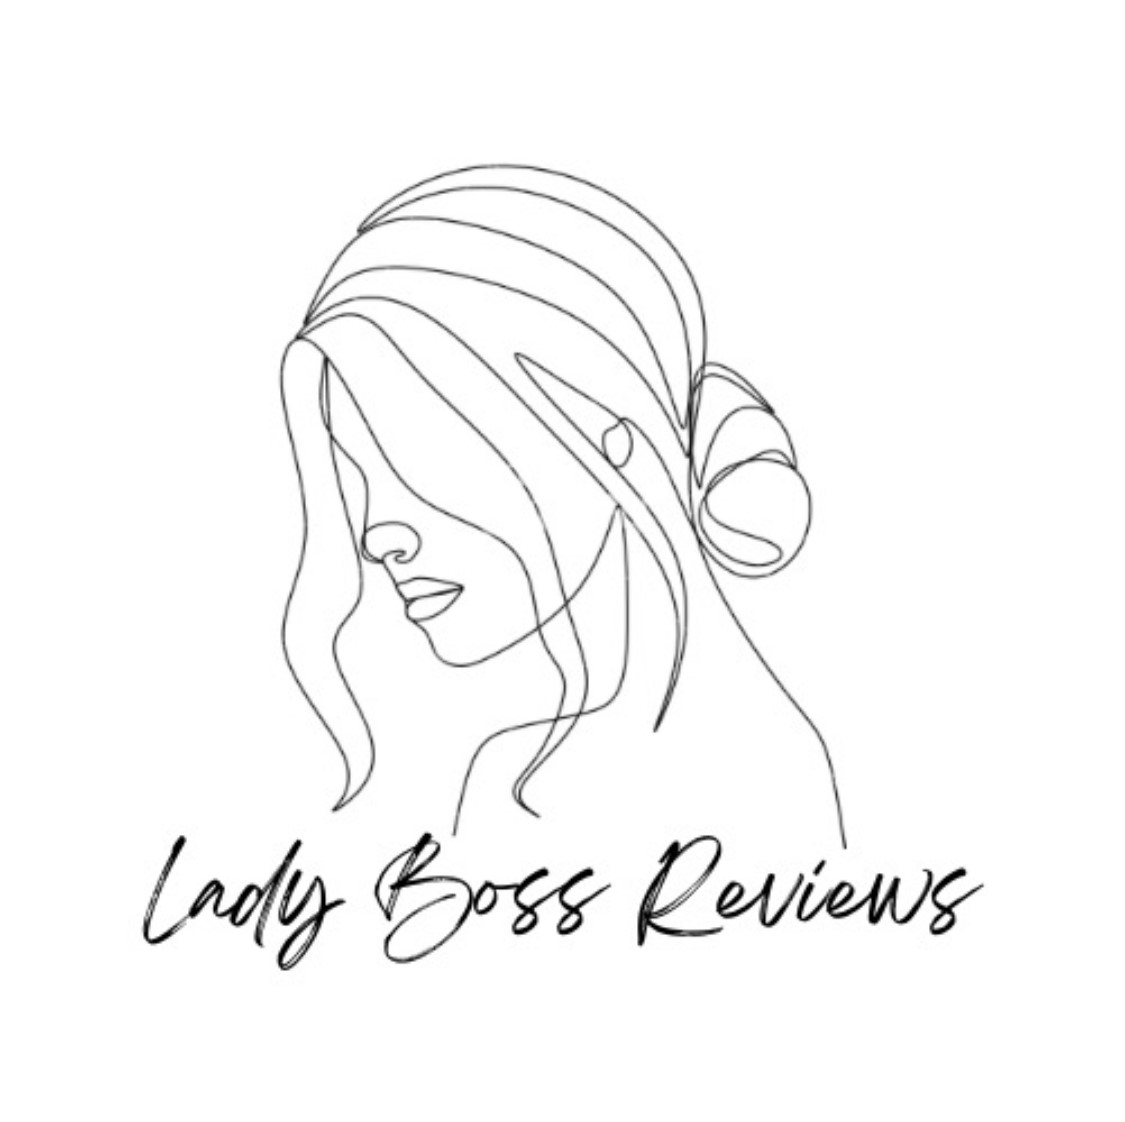 Lady Boss Reviews